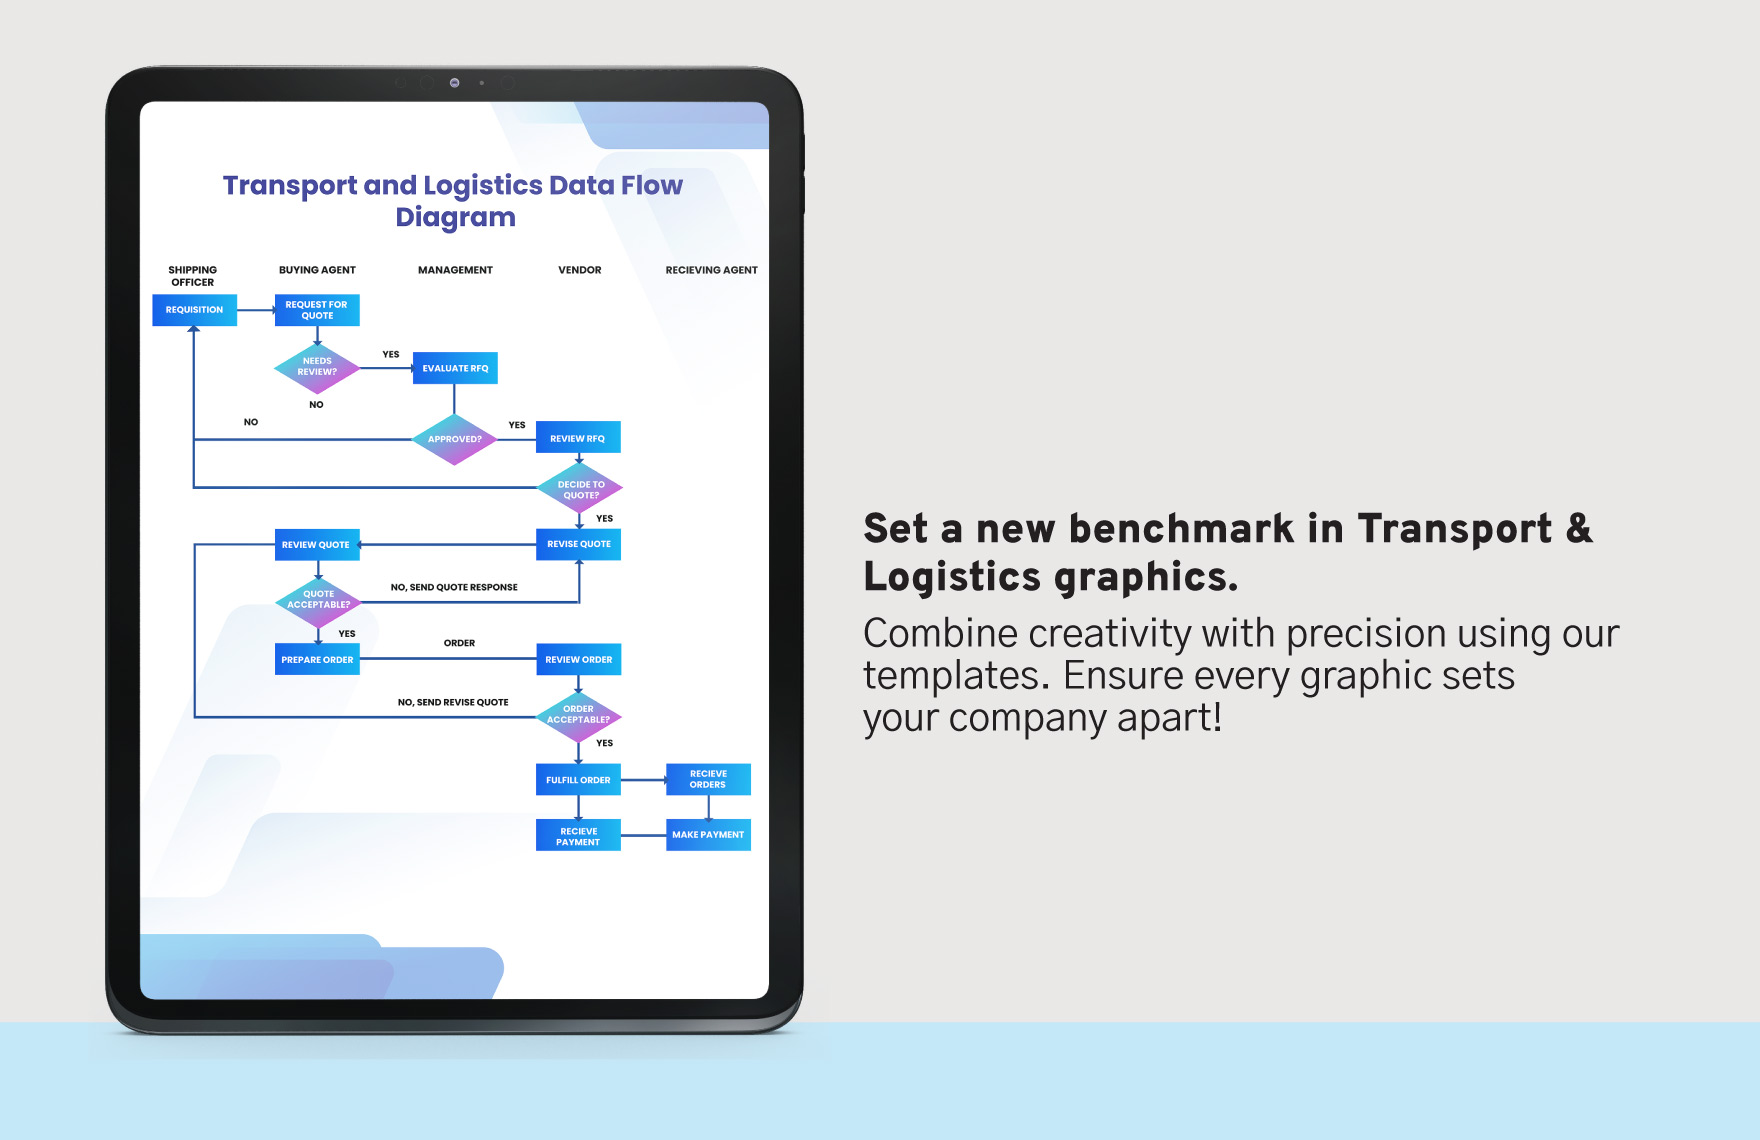 Transport and Logistics Data Flow Diagram Template